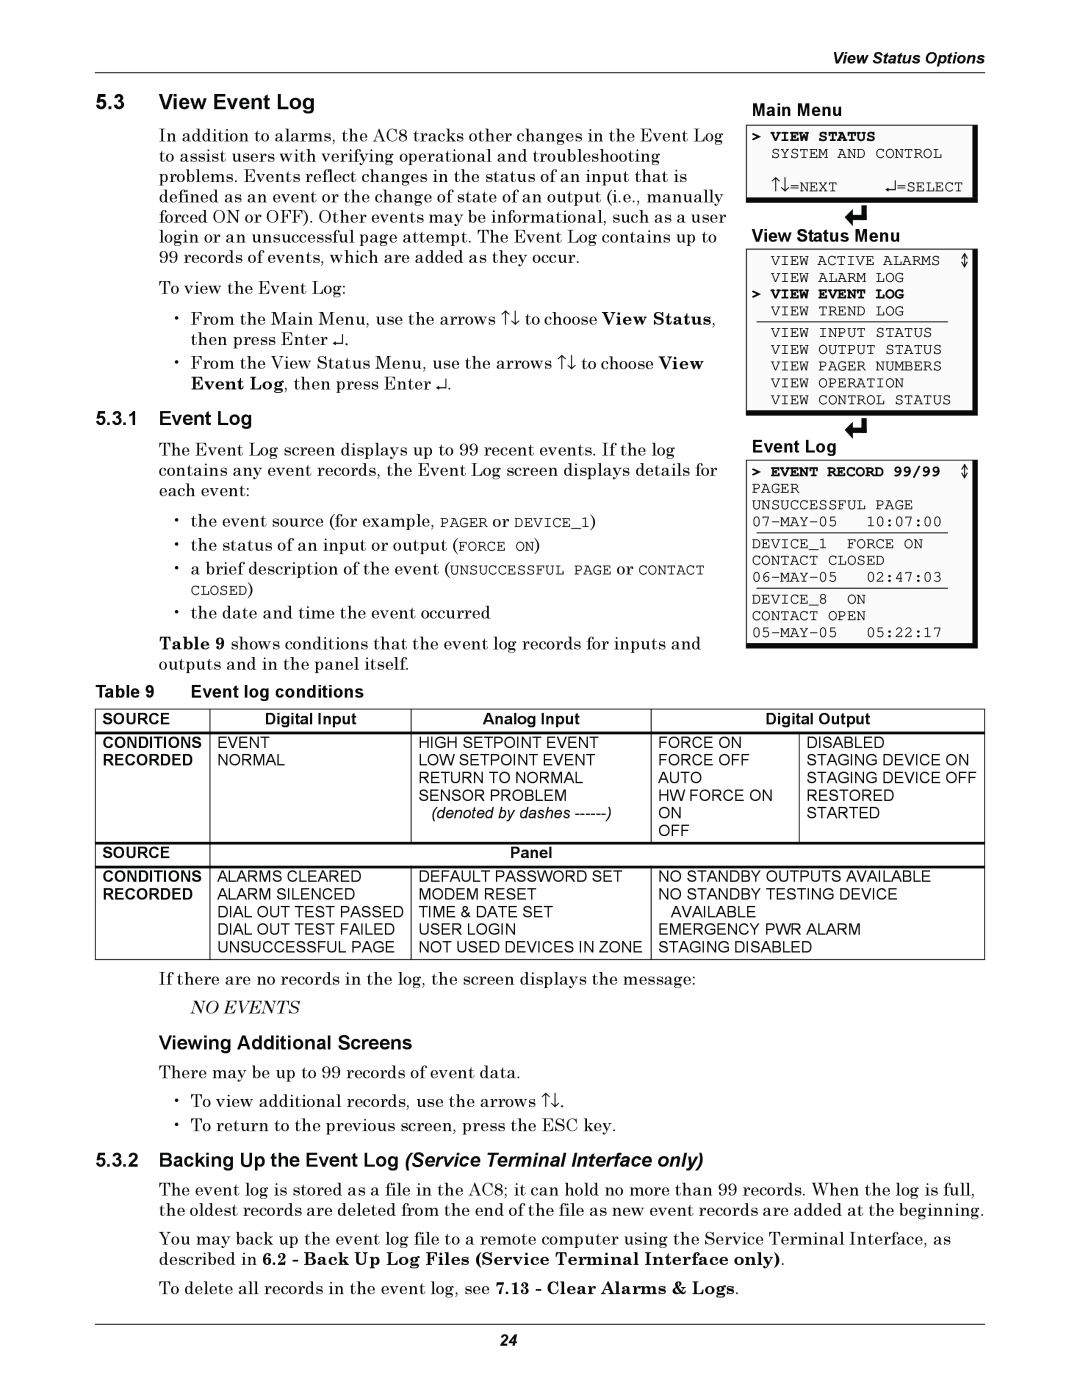 Emerson AC8 5.3.1Event Log, Viewing Additional Screens, Main Menu, View Status Menu, Table, Event log conditions 